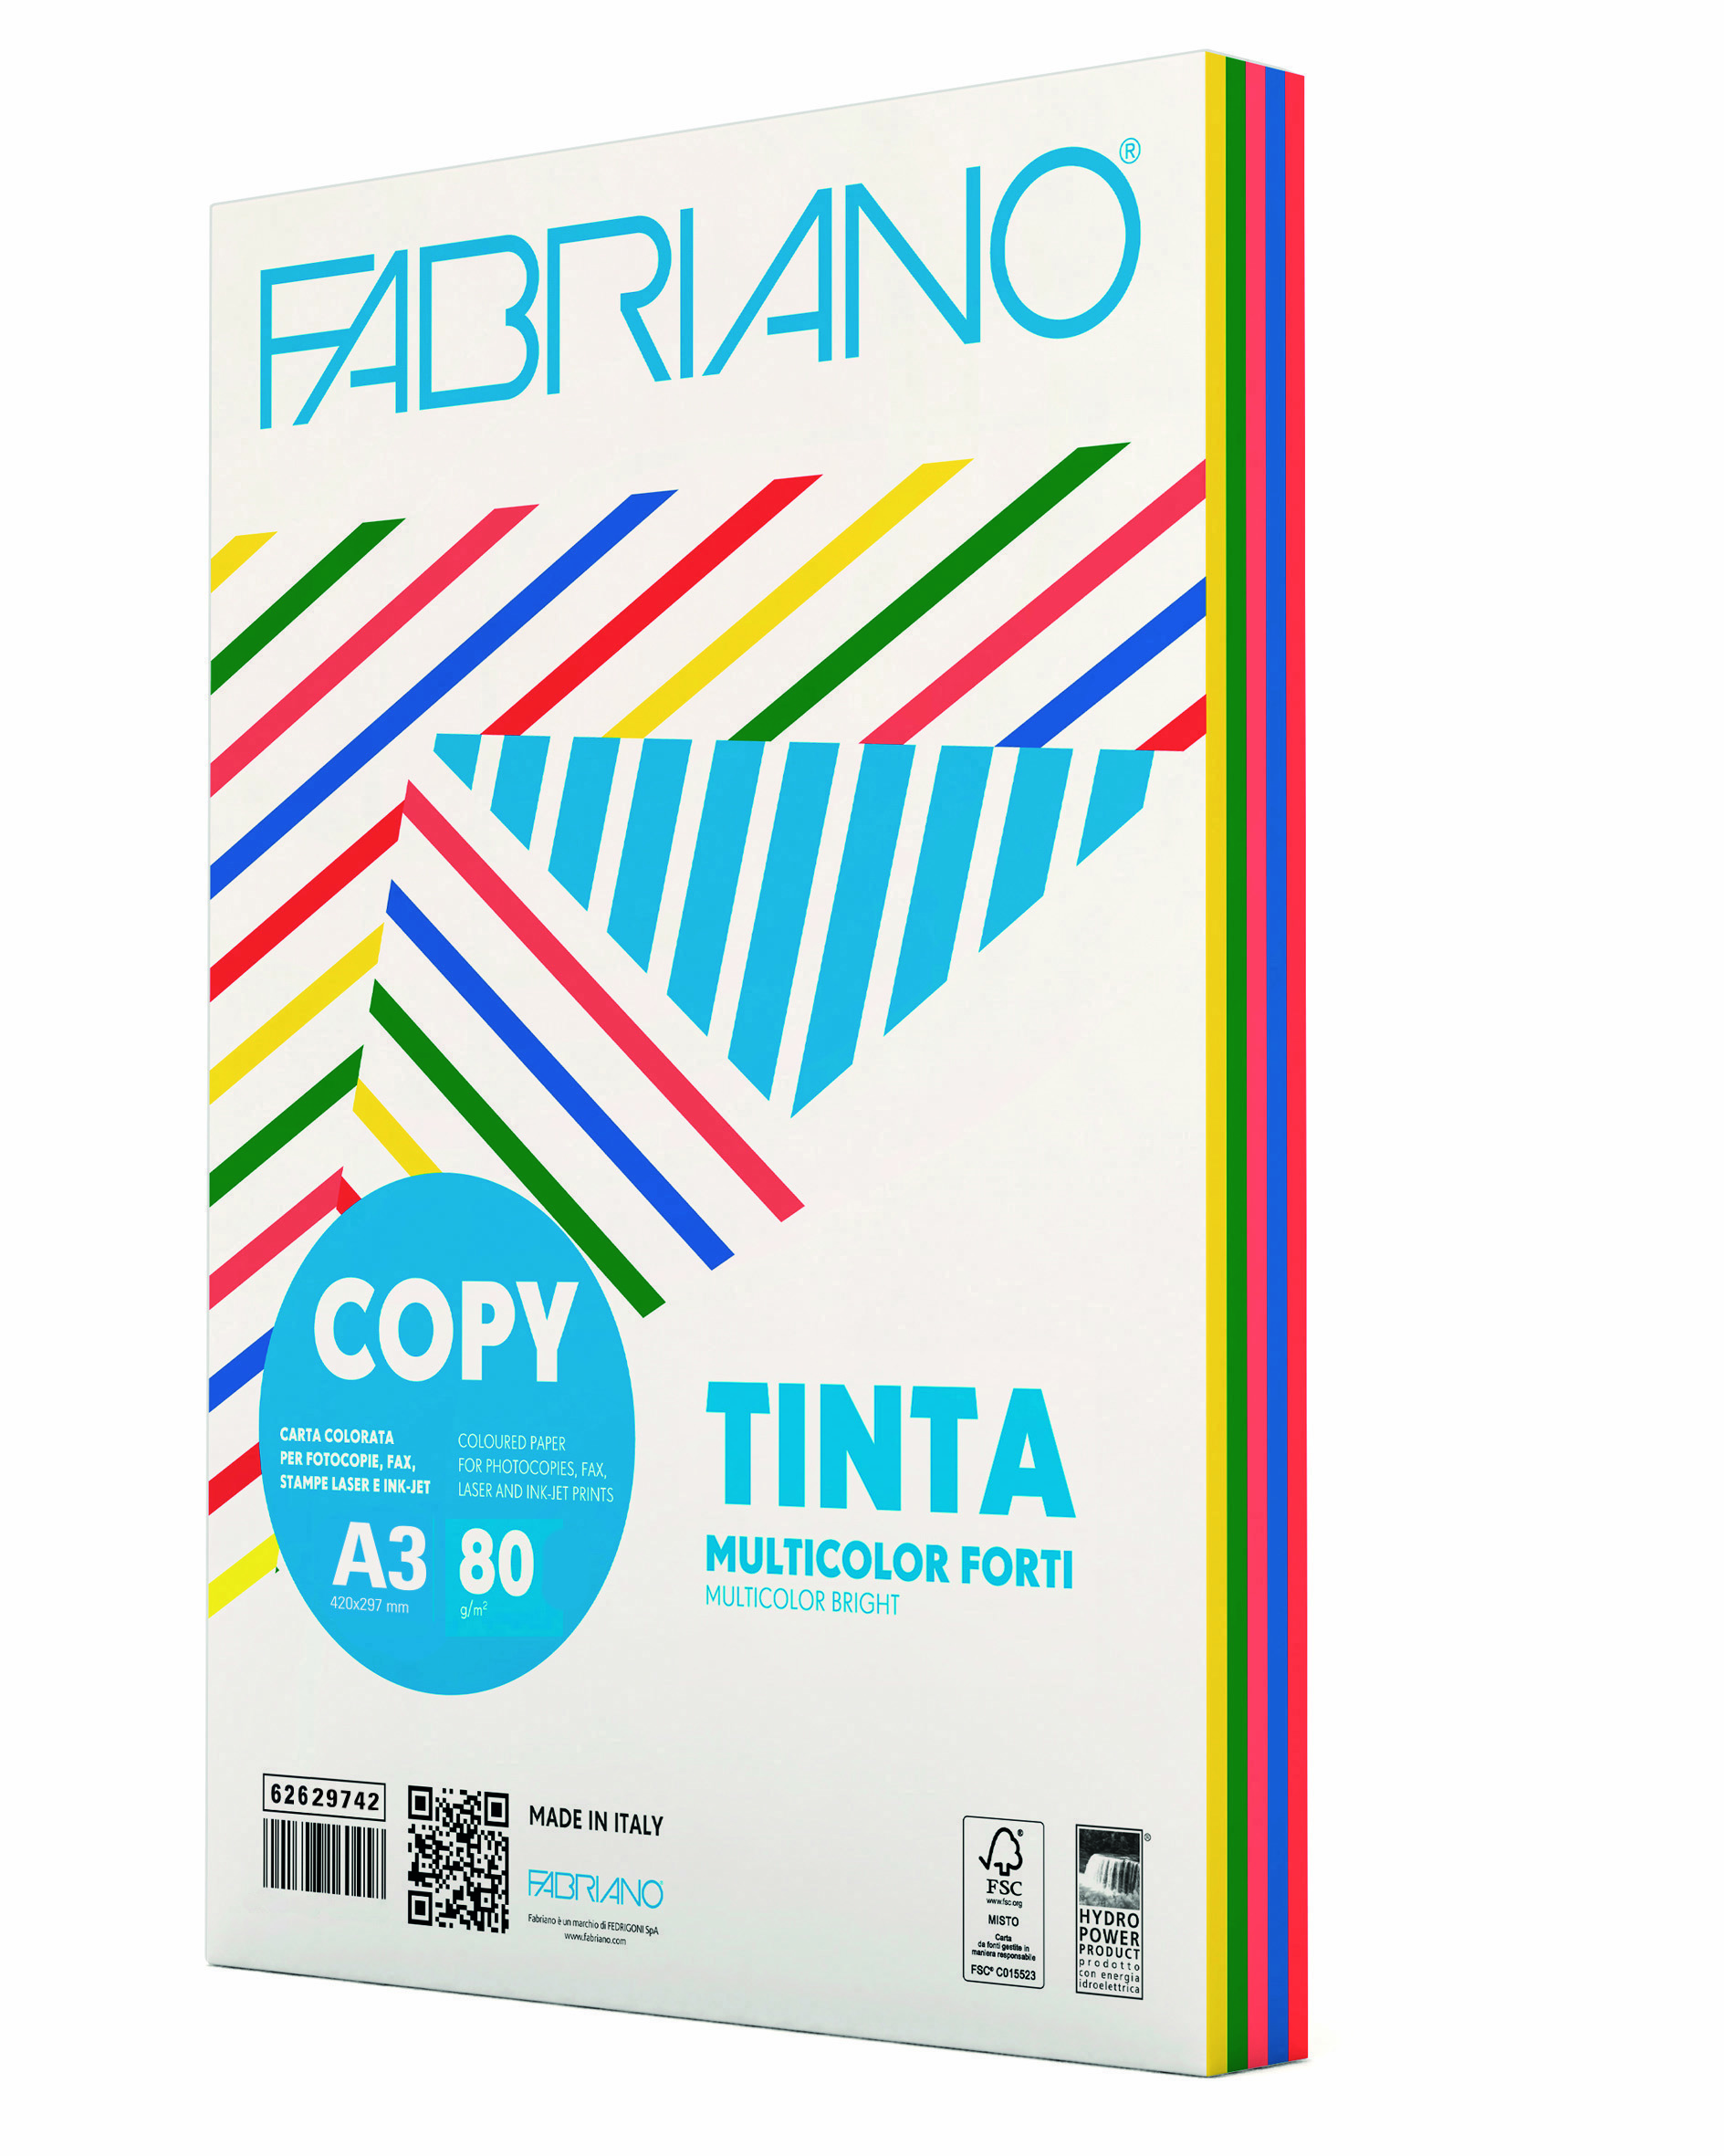 Carta Copy Tinta Multicolor A3 80gr 250fg Mix 5 Colori Forti 62629742 8001348161851